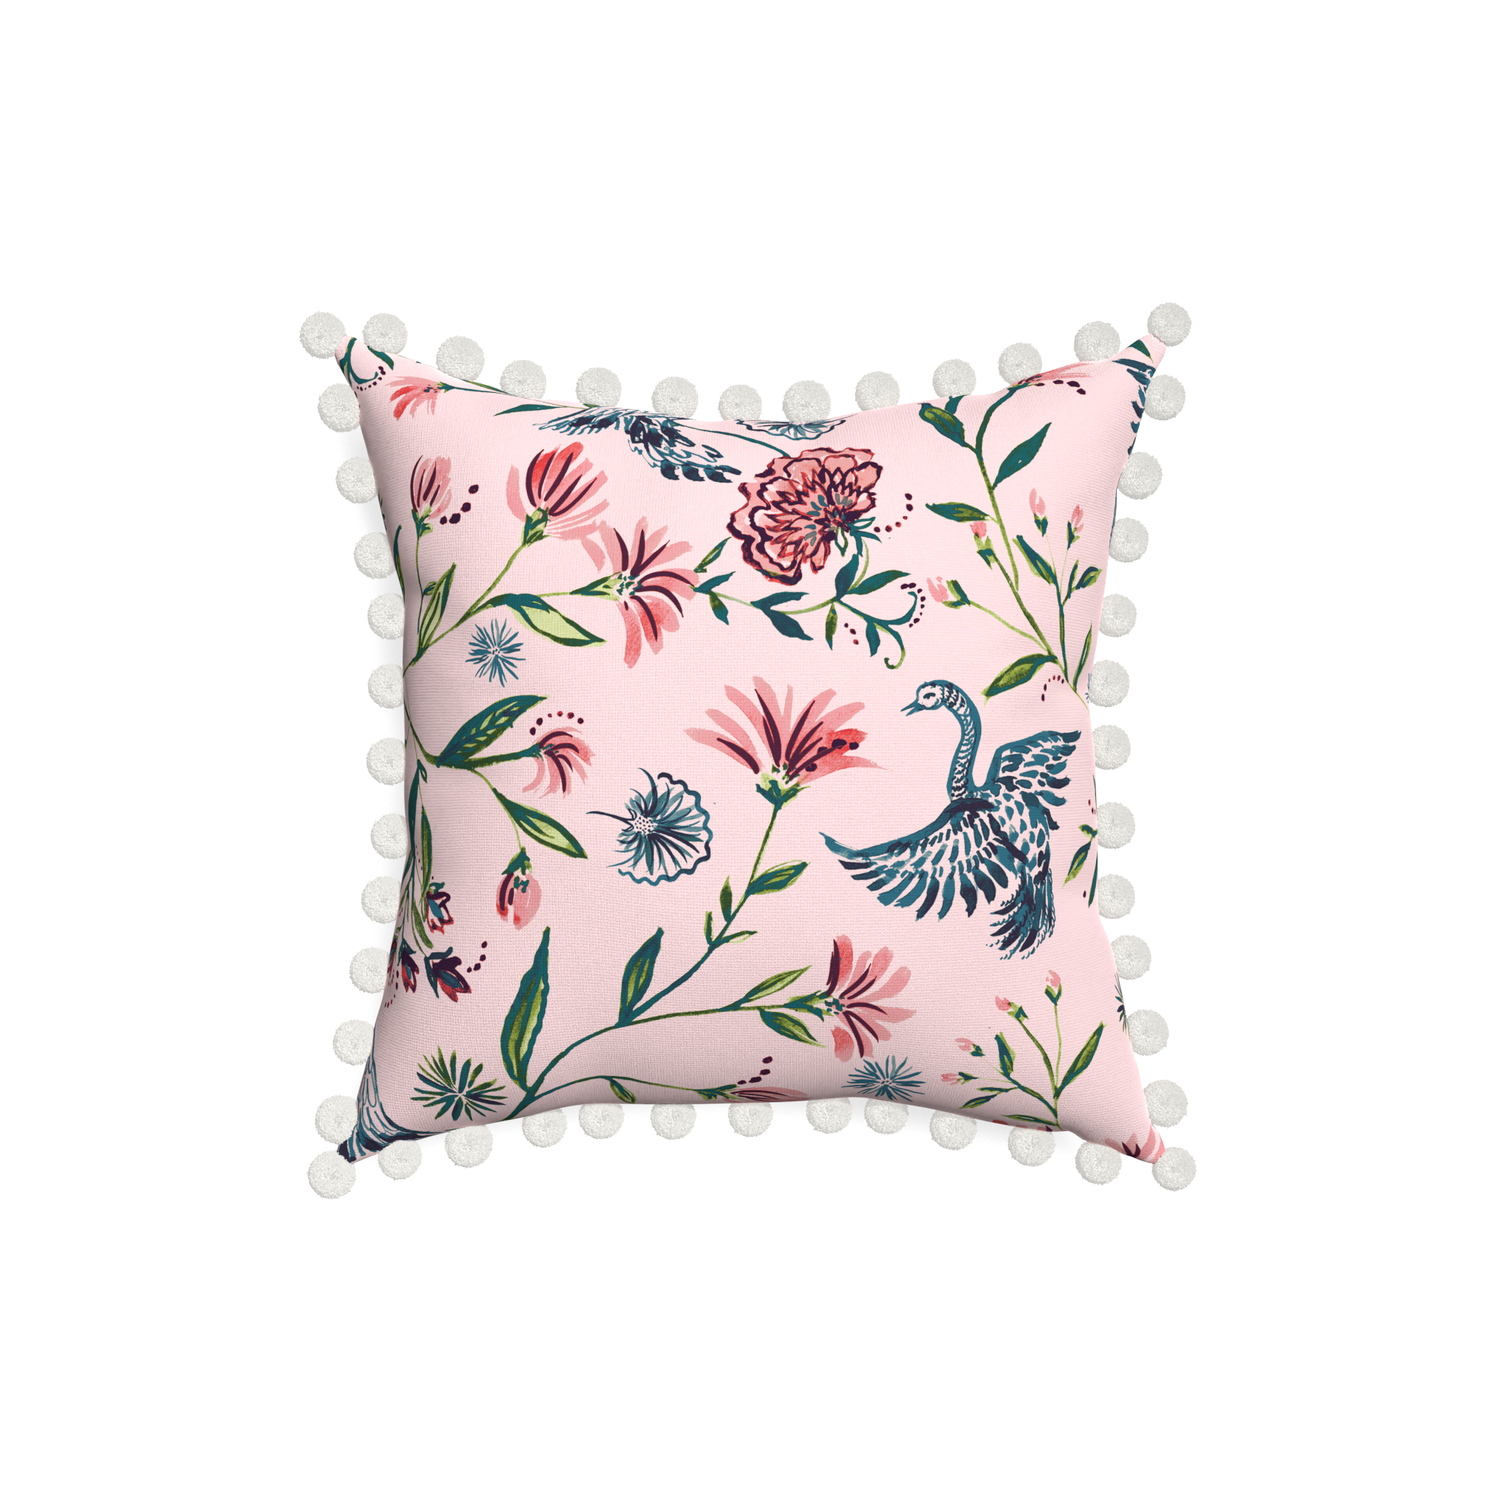 18-square daphne rose custom pillow with snow pom pom on white background